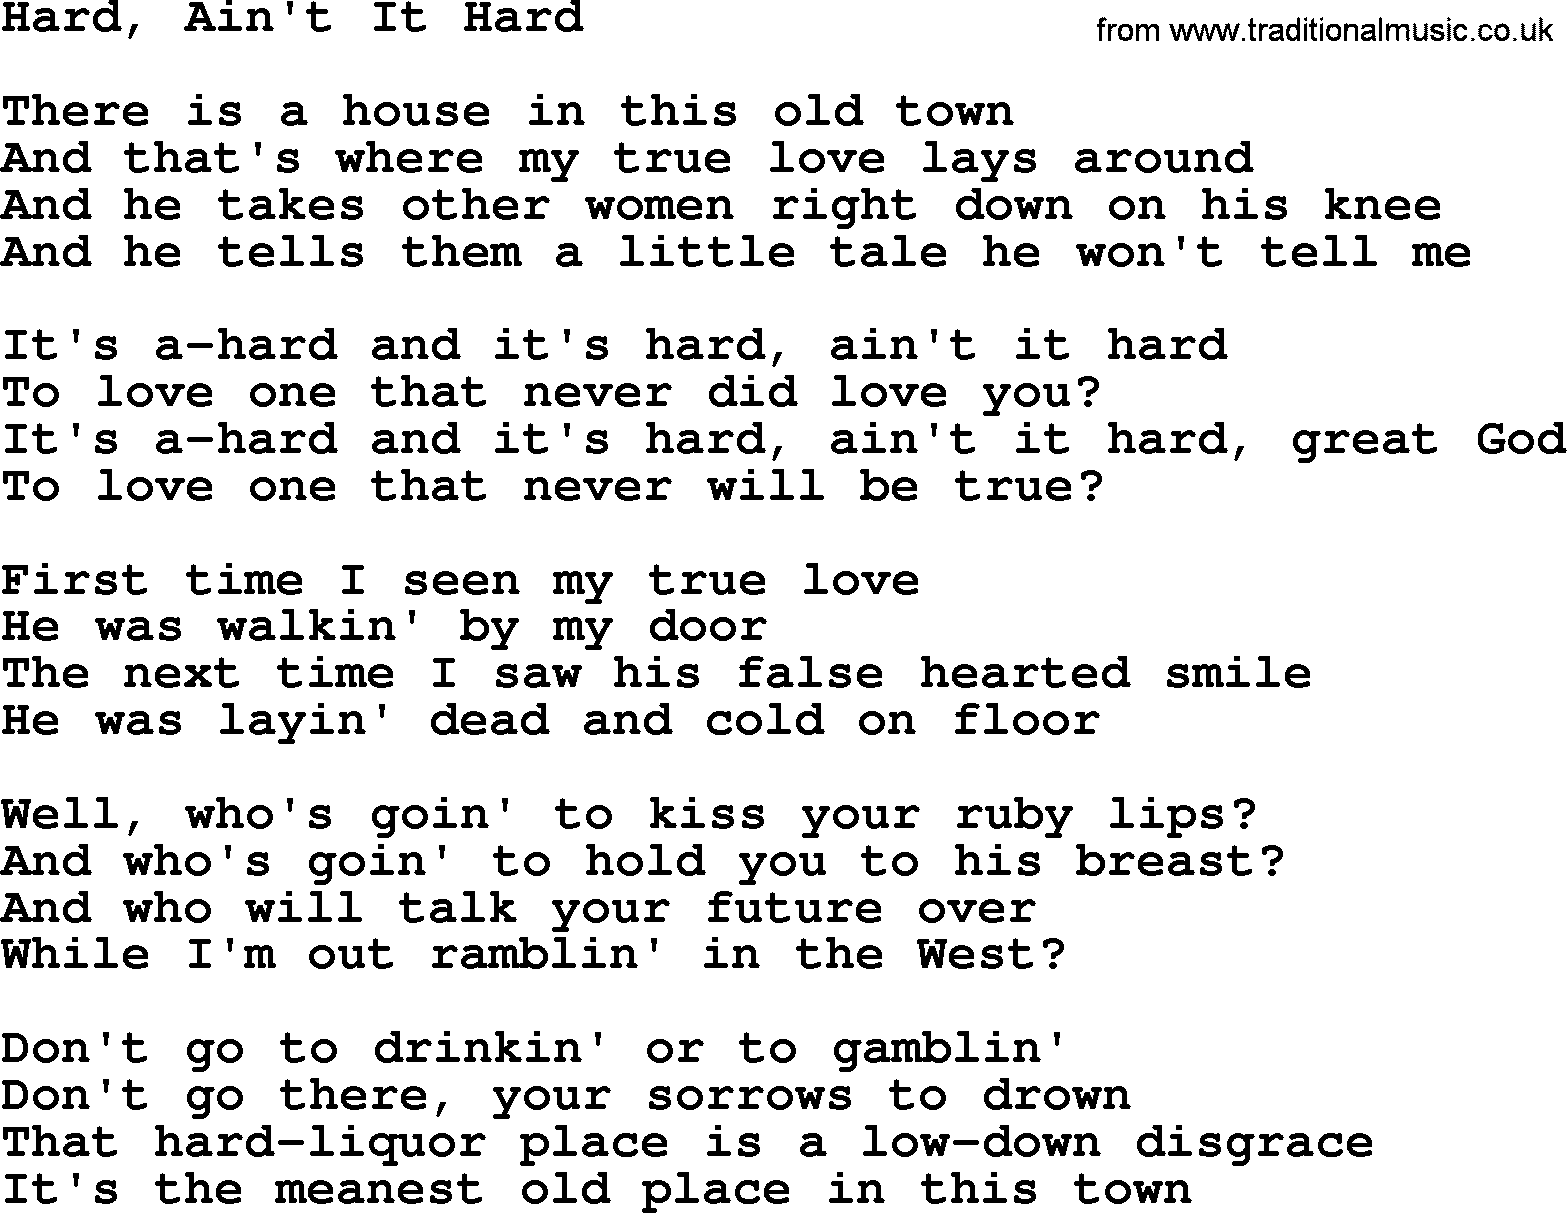 Woody Guthrie song Hard Aint It Hard lyrics